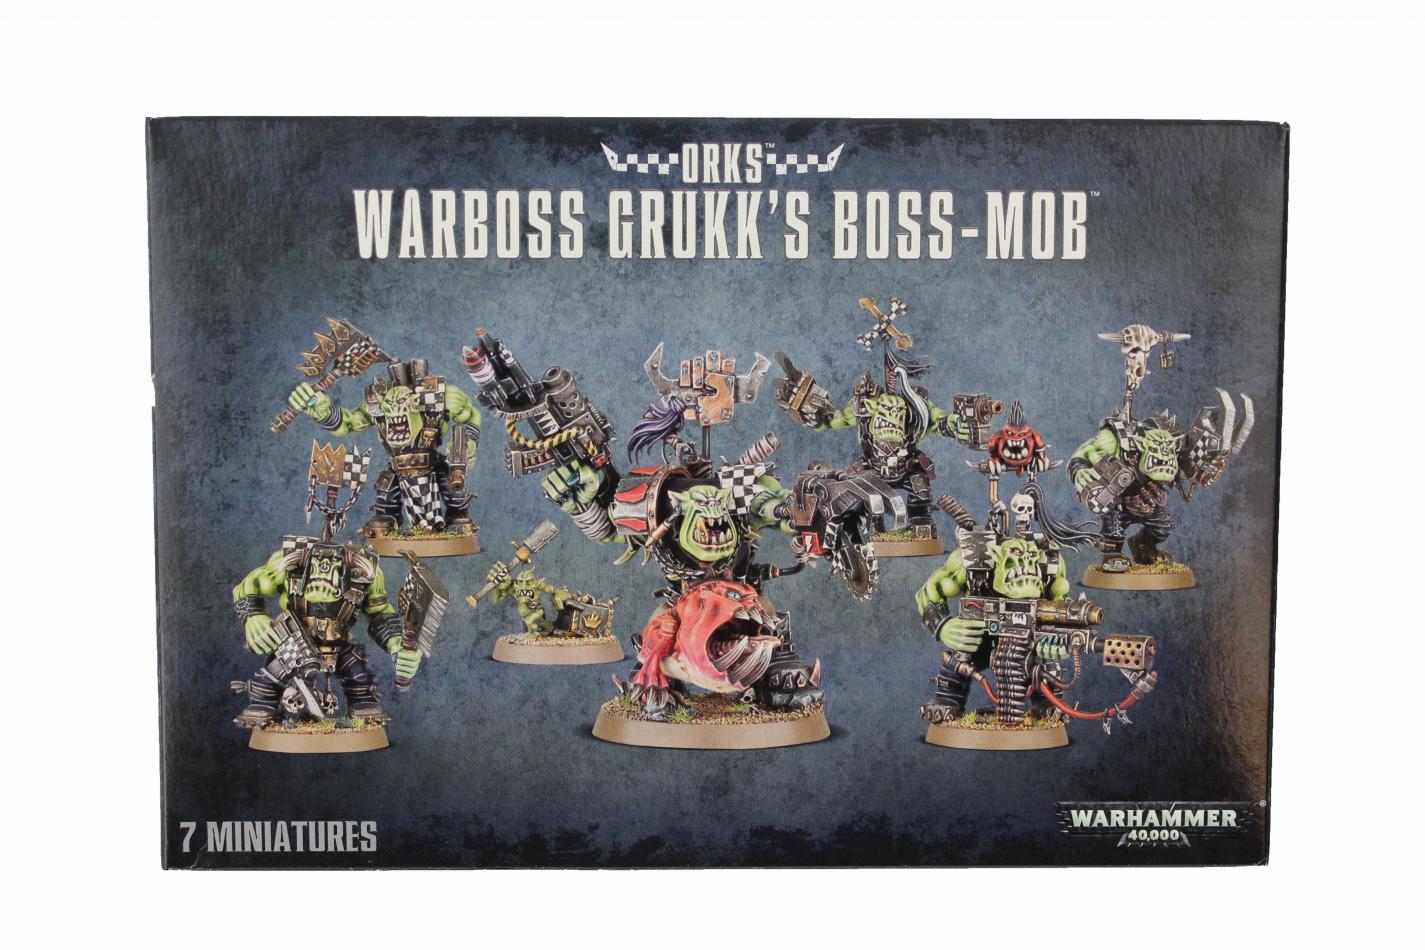 Warboss Grukk's Boss-mob